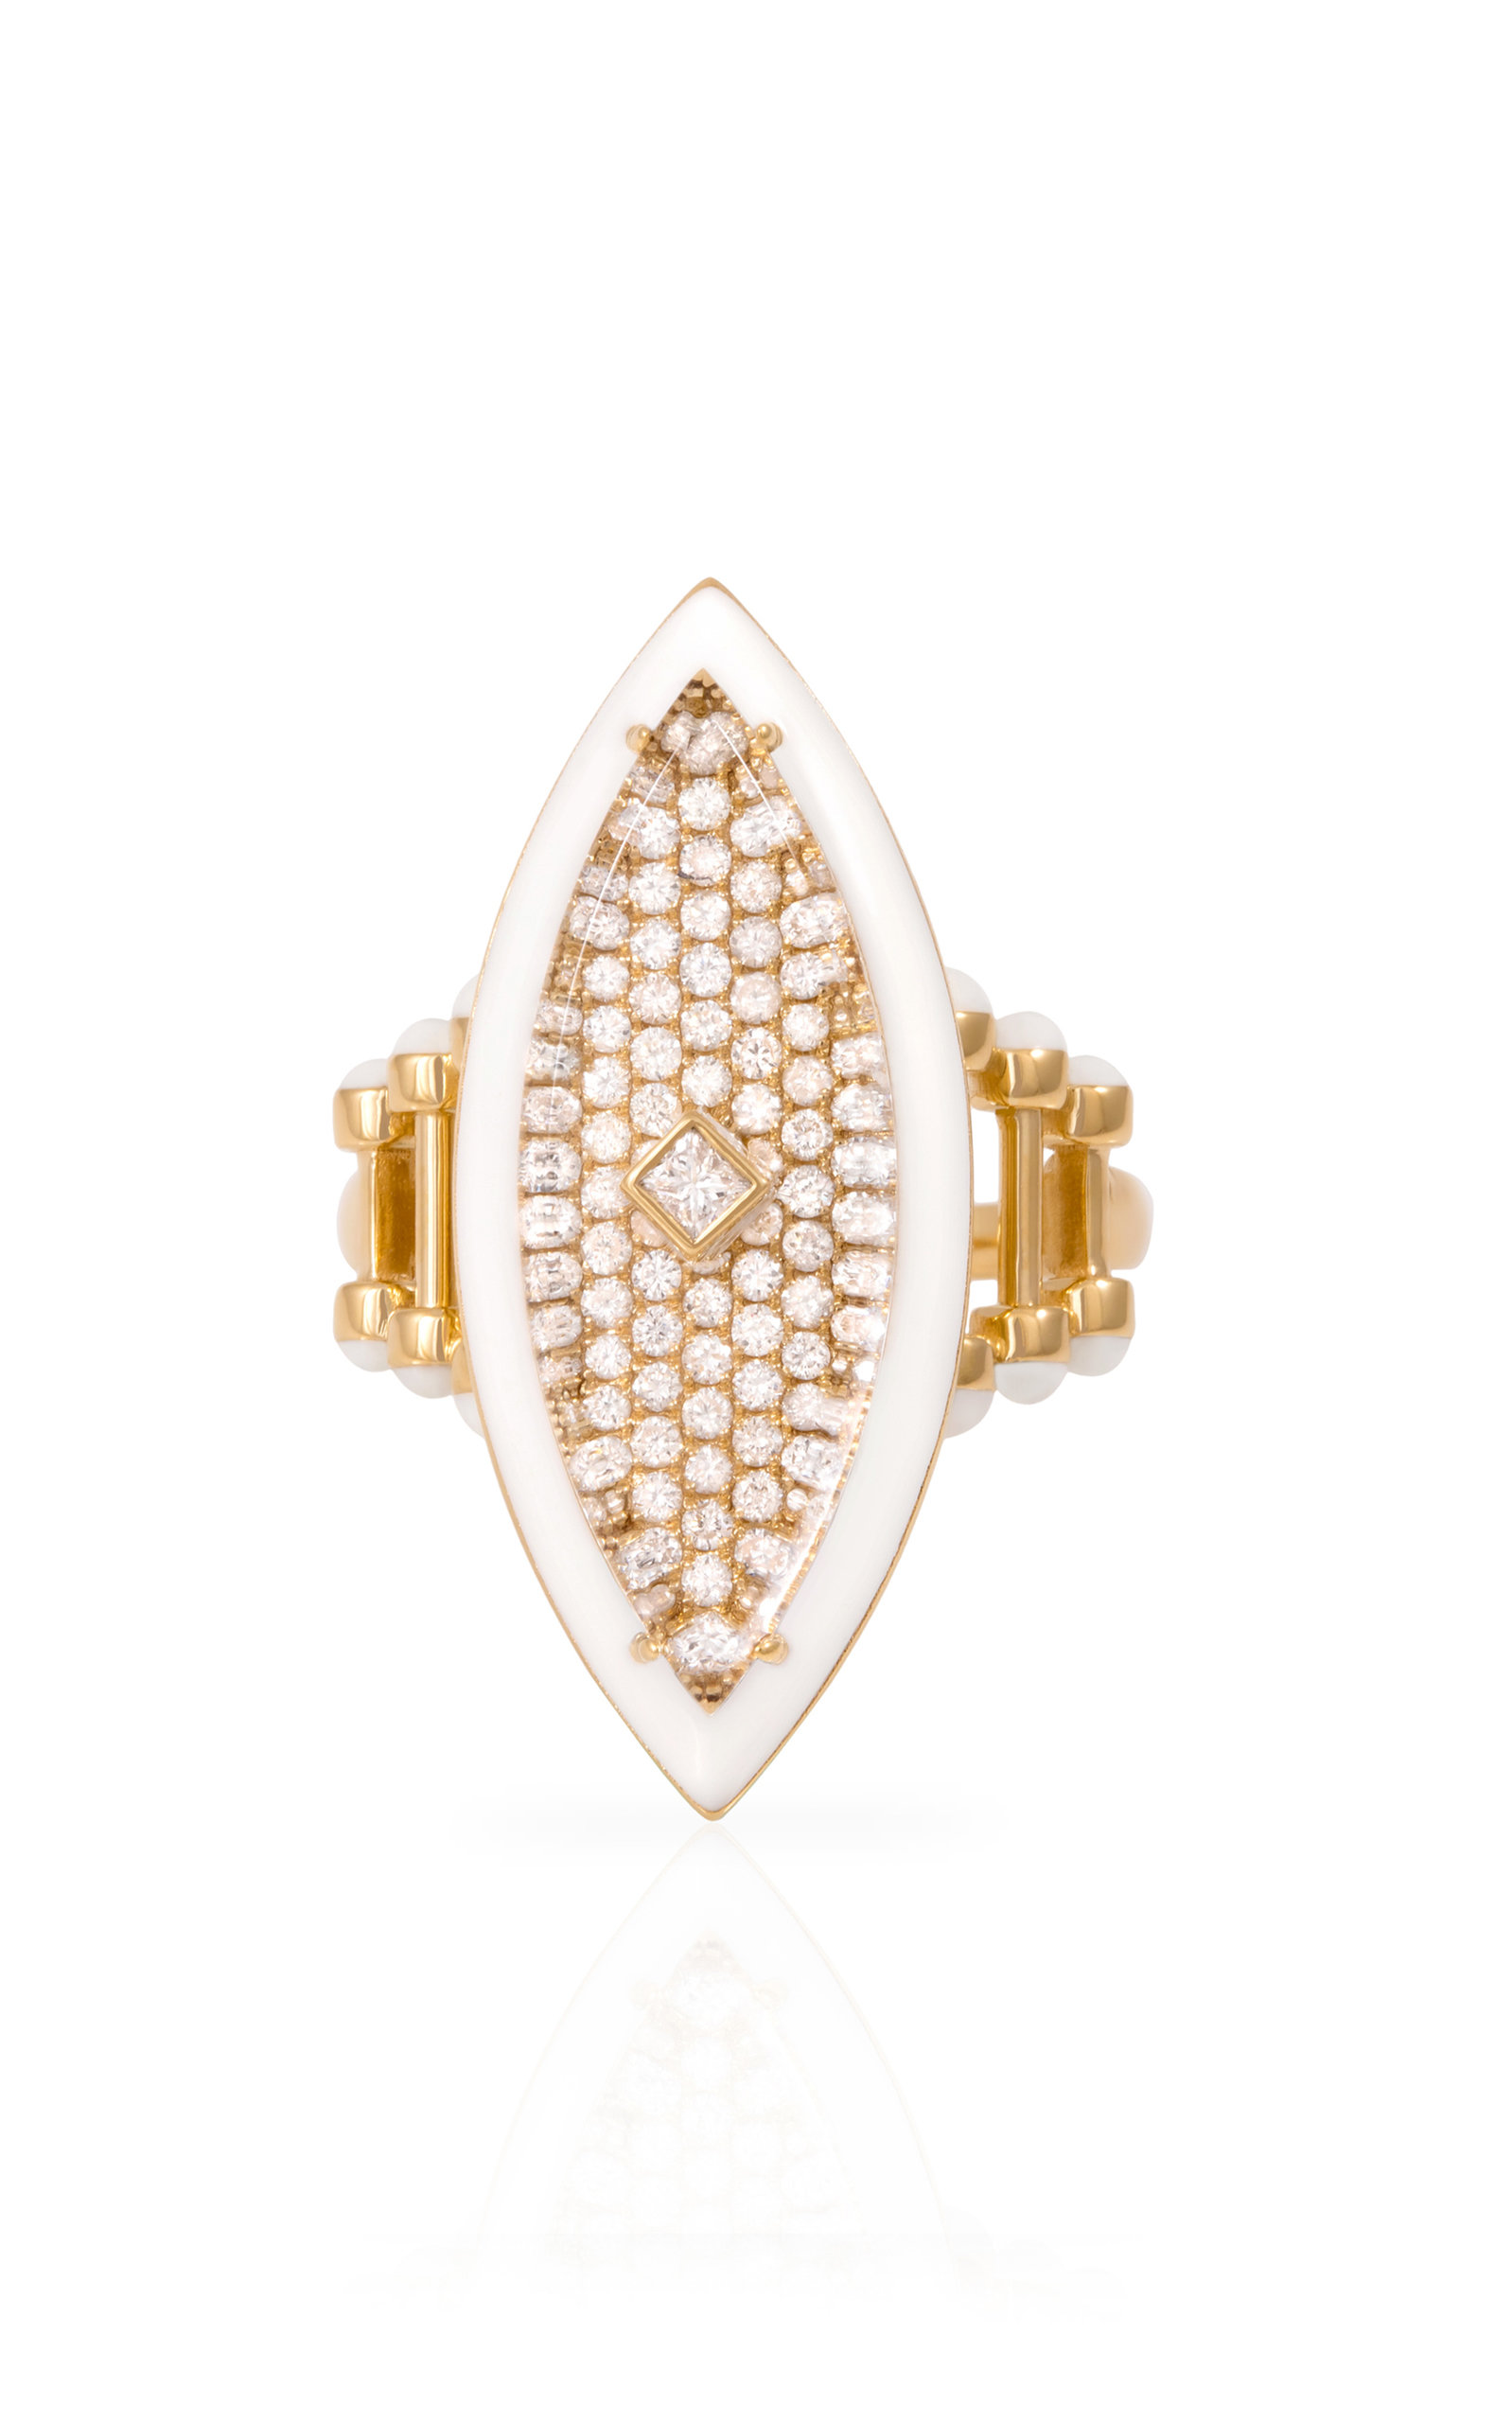 L'Atelier Nawbar Women's The Swan 18K Yellow Gold Diamond Ring